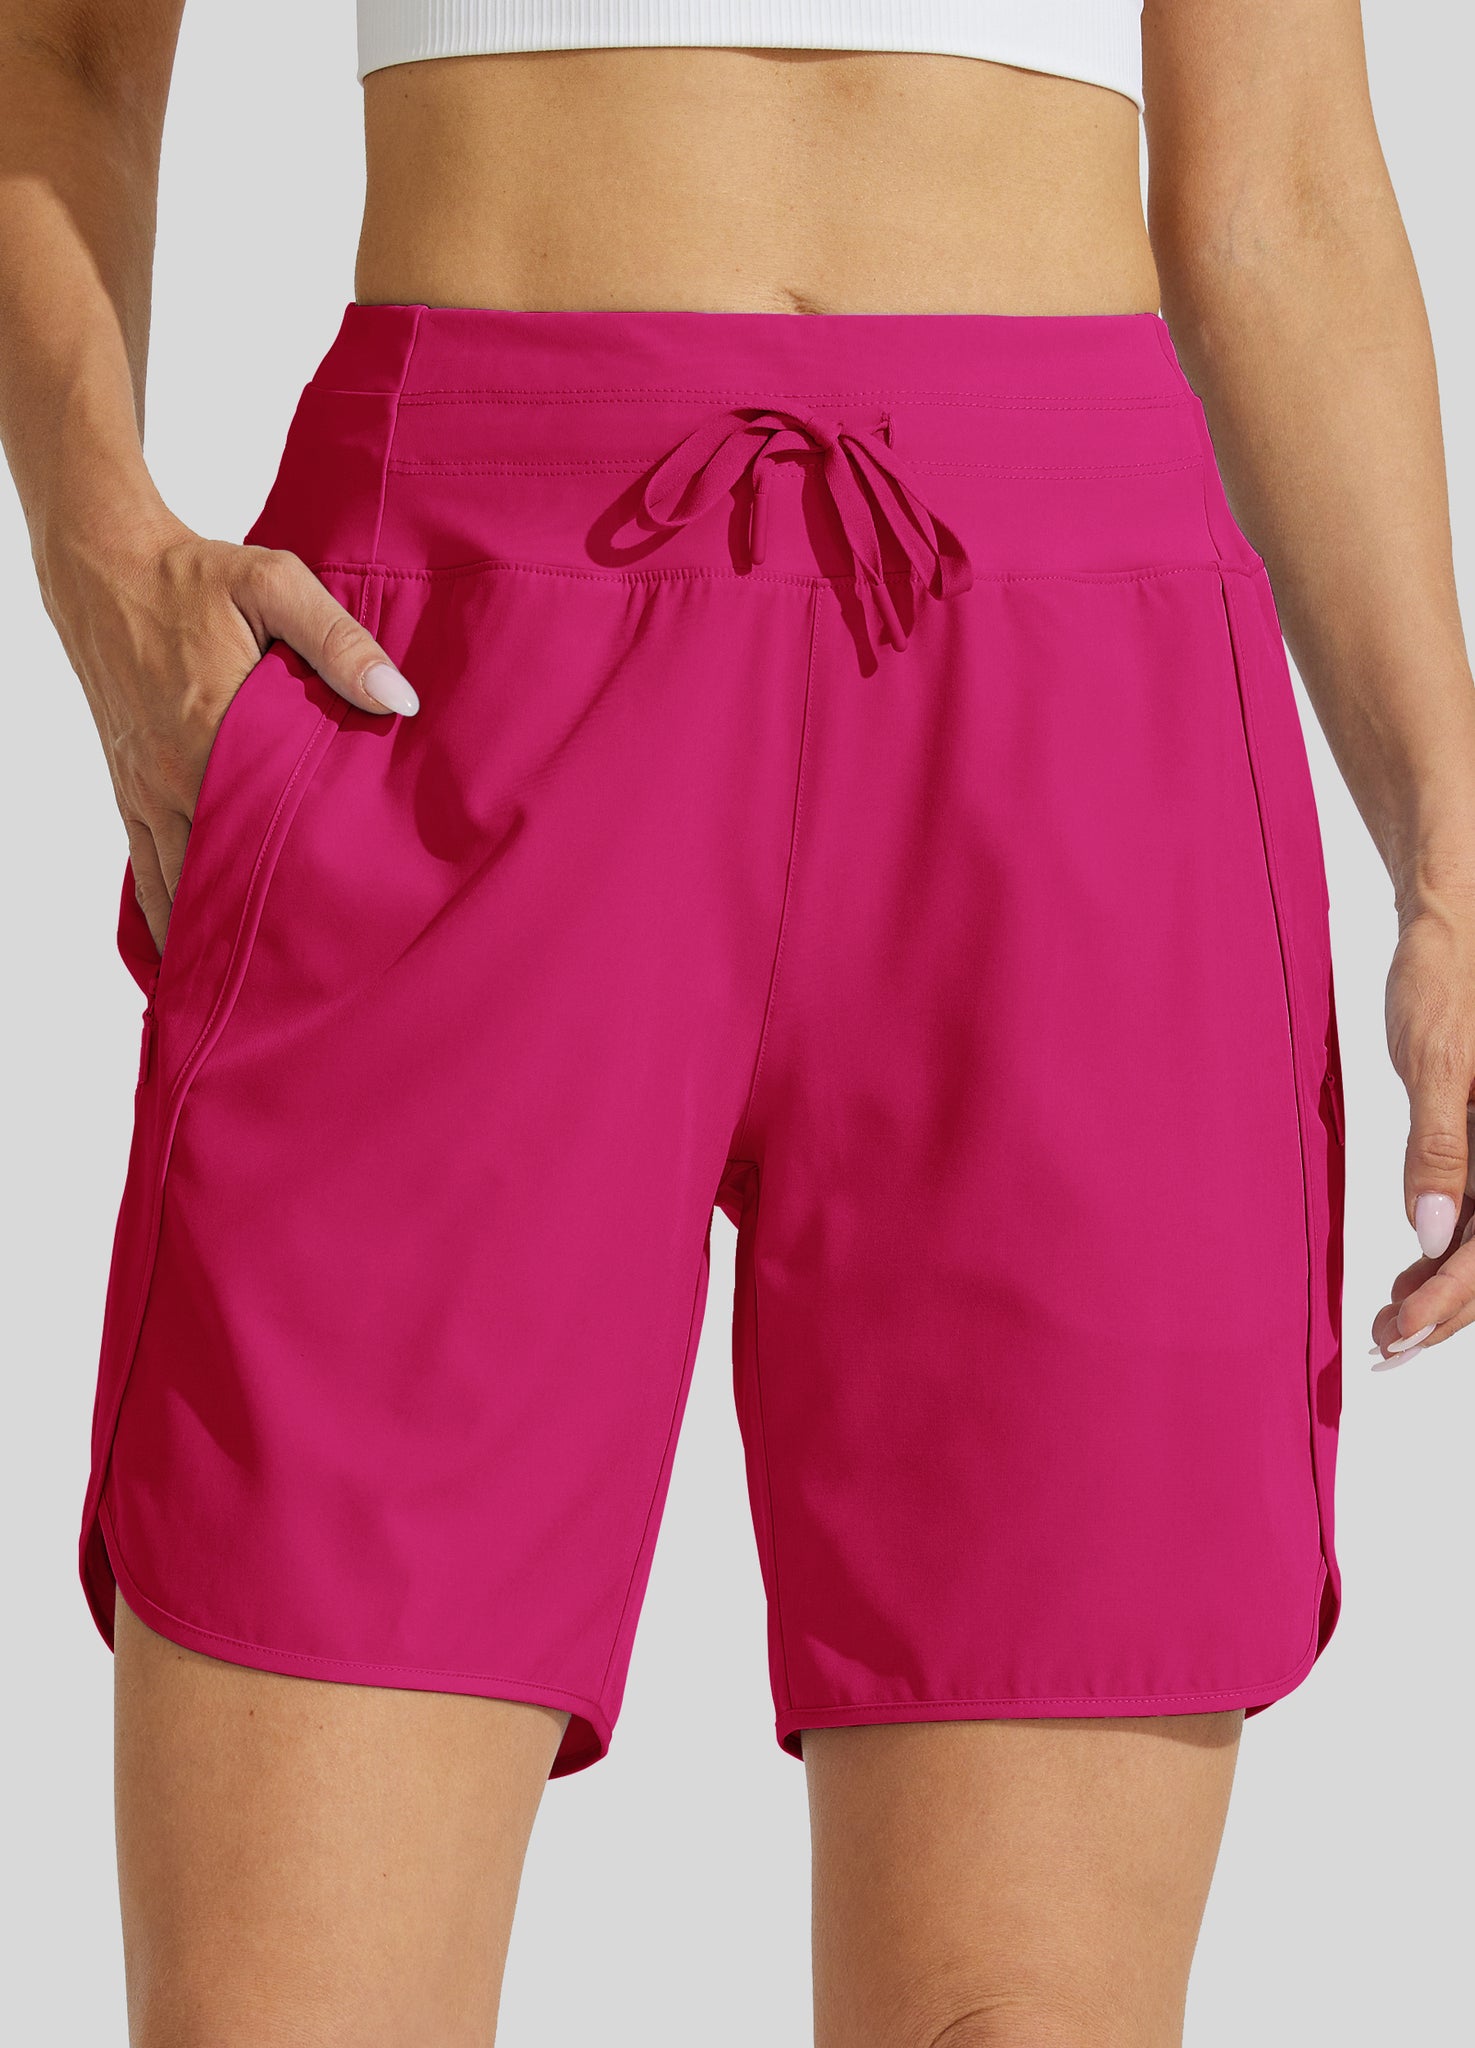 Women's Active 7 Inseam Utility Shorts